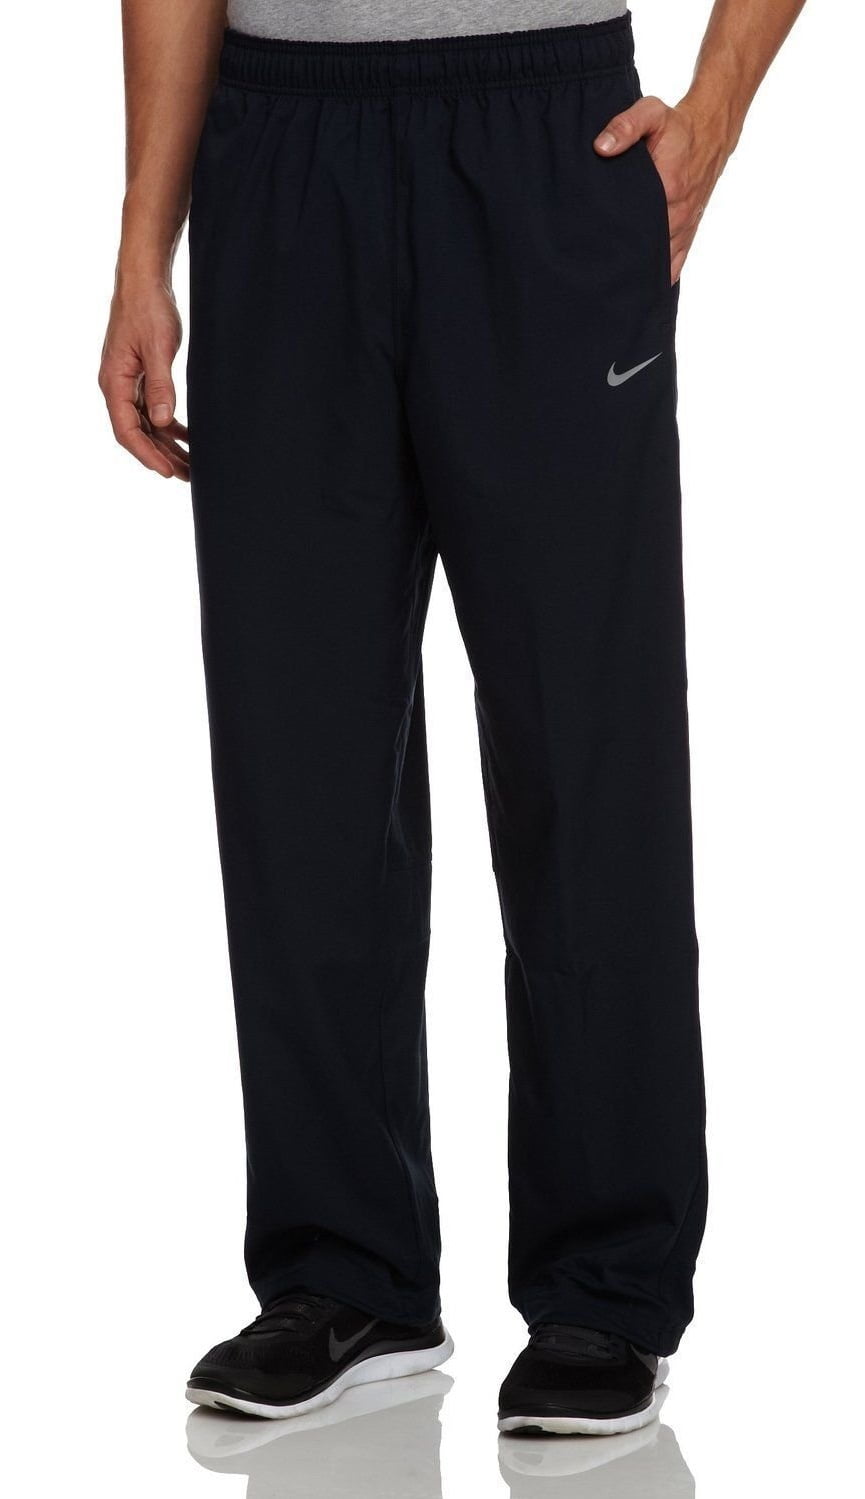 Betuttelen versus Picasso Nike Men's Dri-Fit Stretch Woven Running Pants - Walmart.com